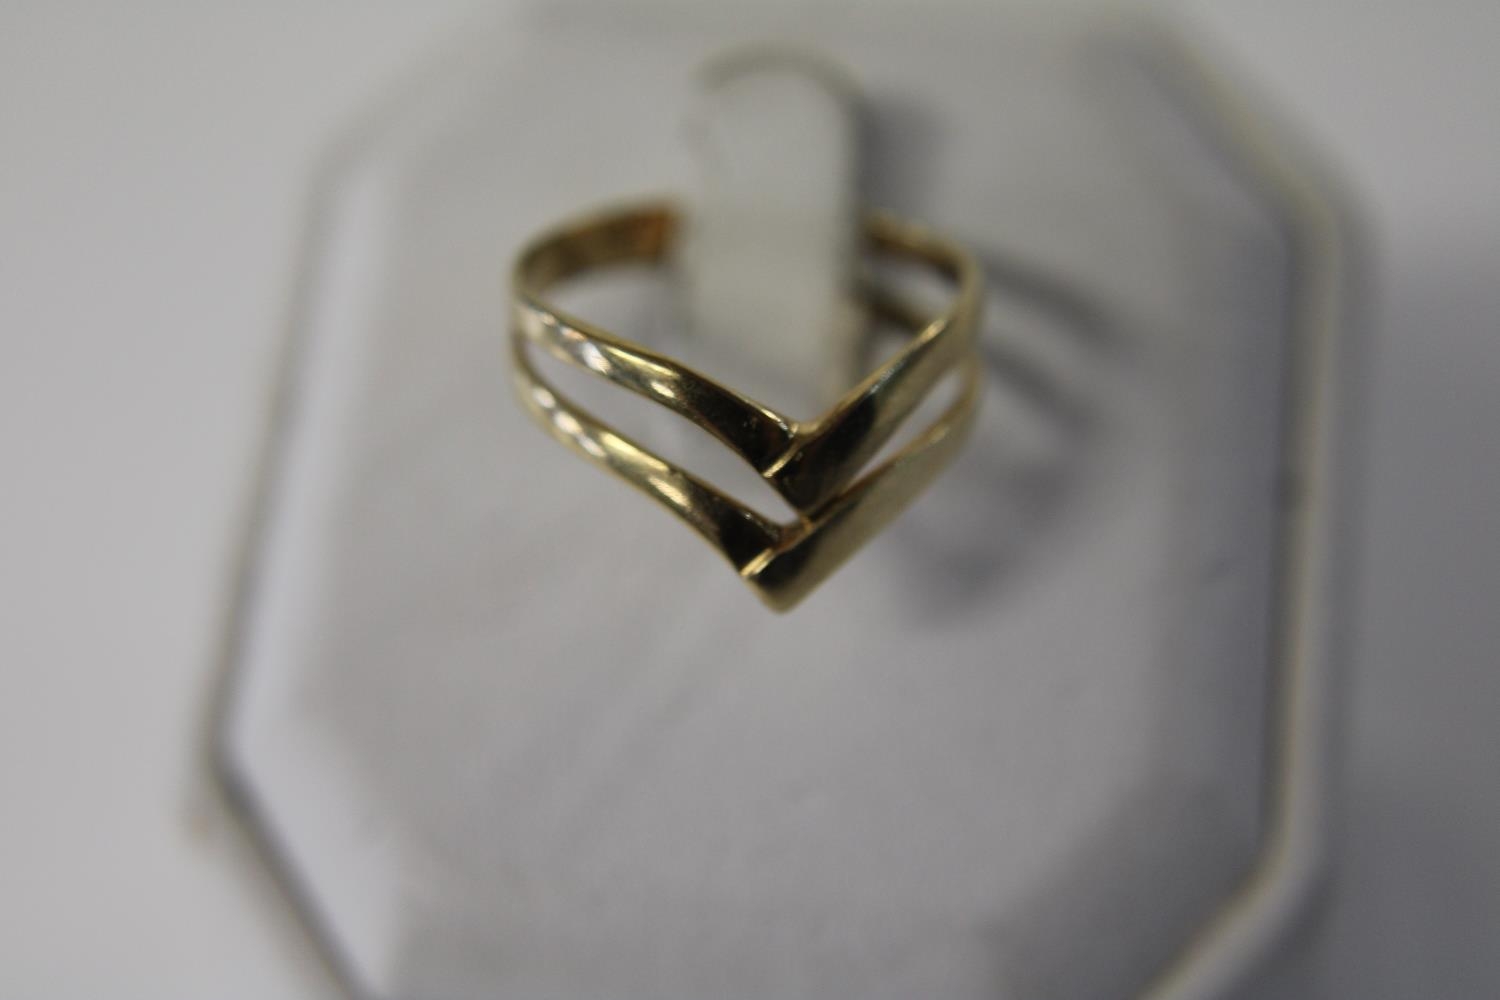 A 14ct gold ring (broken) 2.1 grams